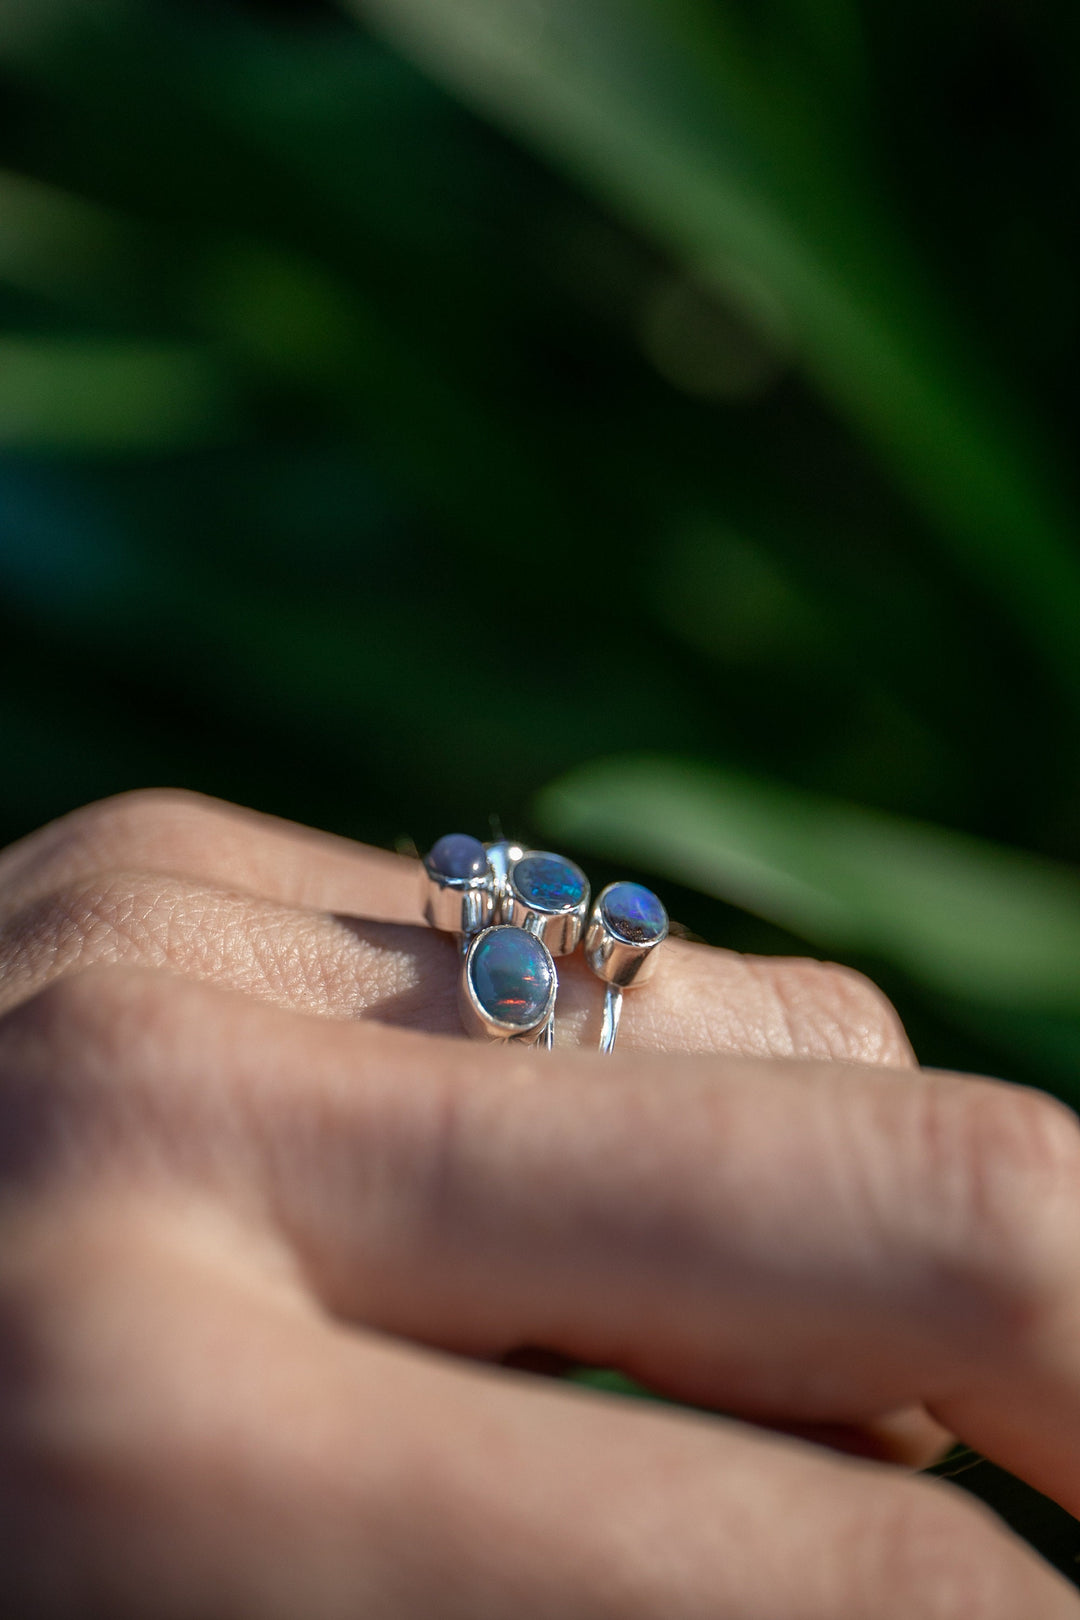 Australian Multi Blue Opal Ring set in Sterling Silver Band - Size 6 US